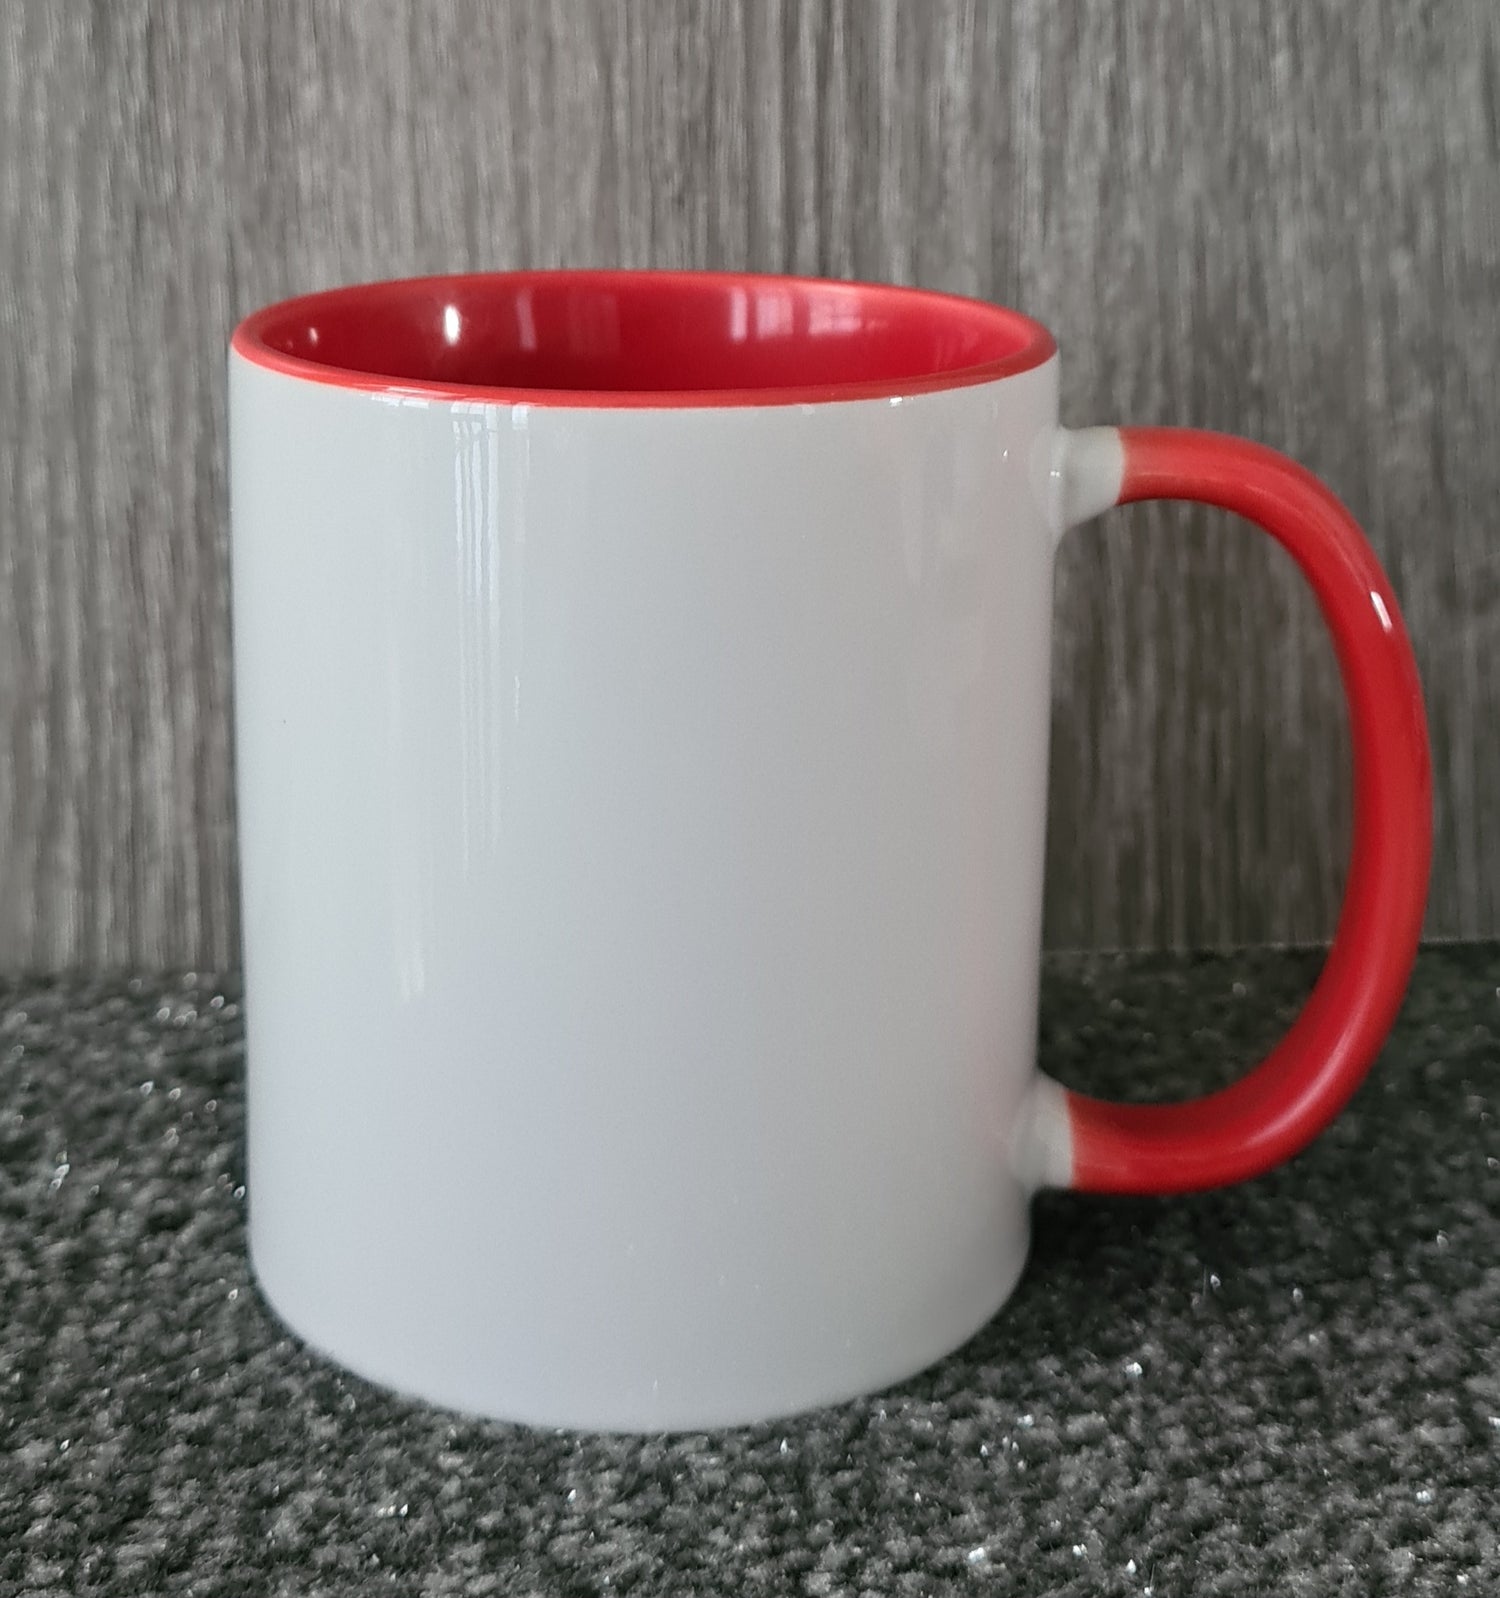 Sublimation Mug 11oz Red - Inside and Handle